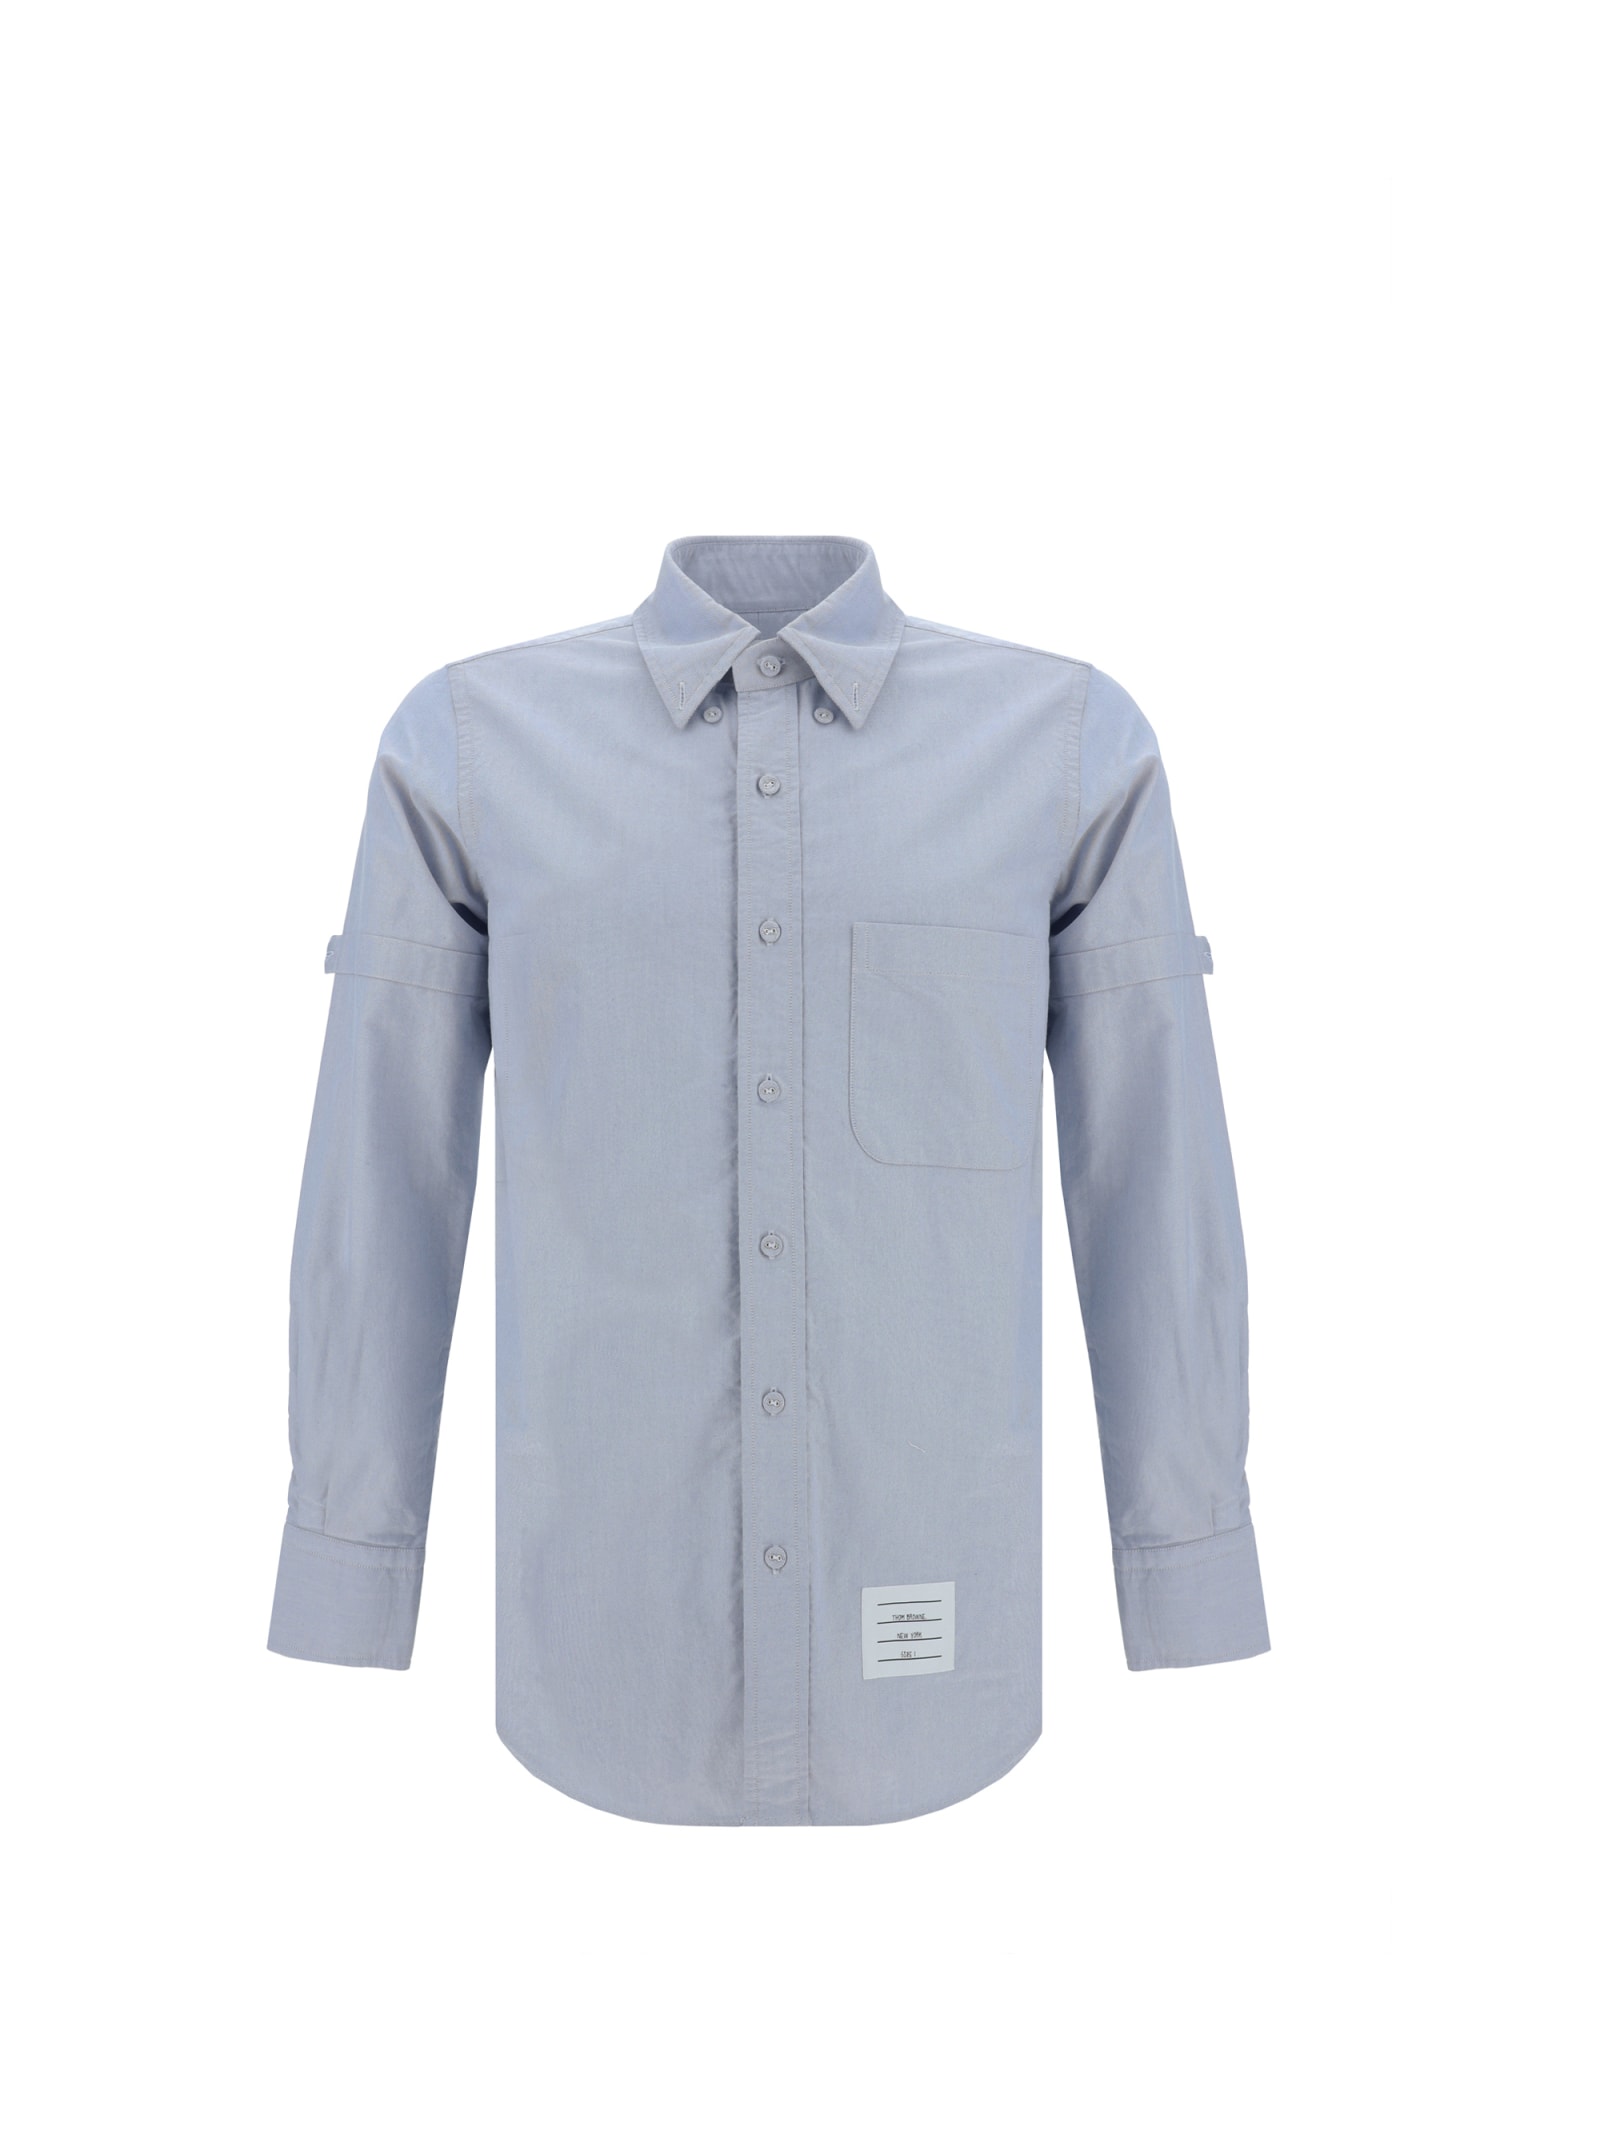 Thom Browne Shirt In Light Blue